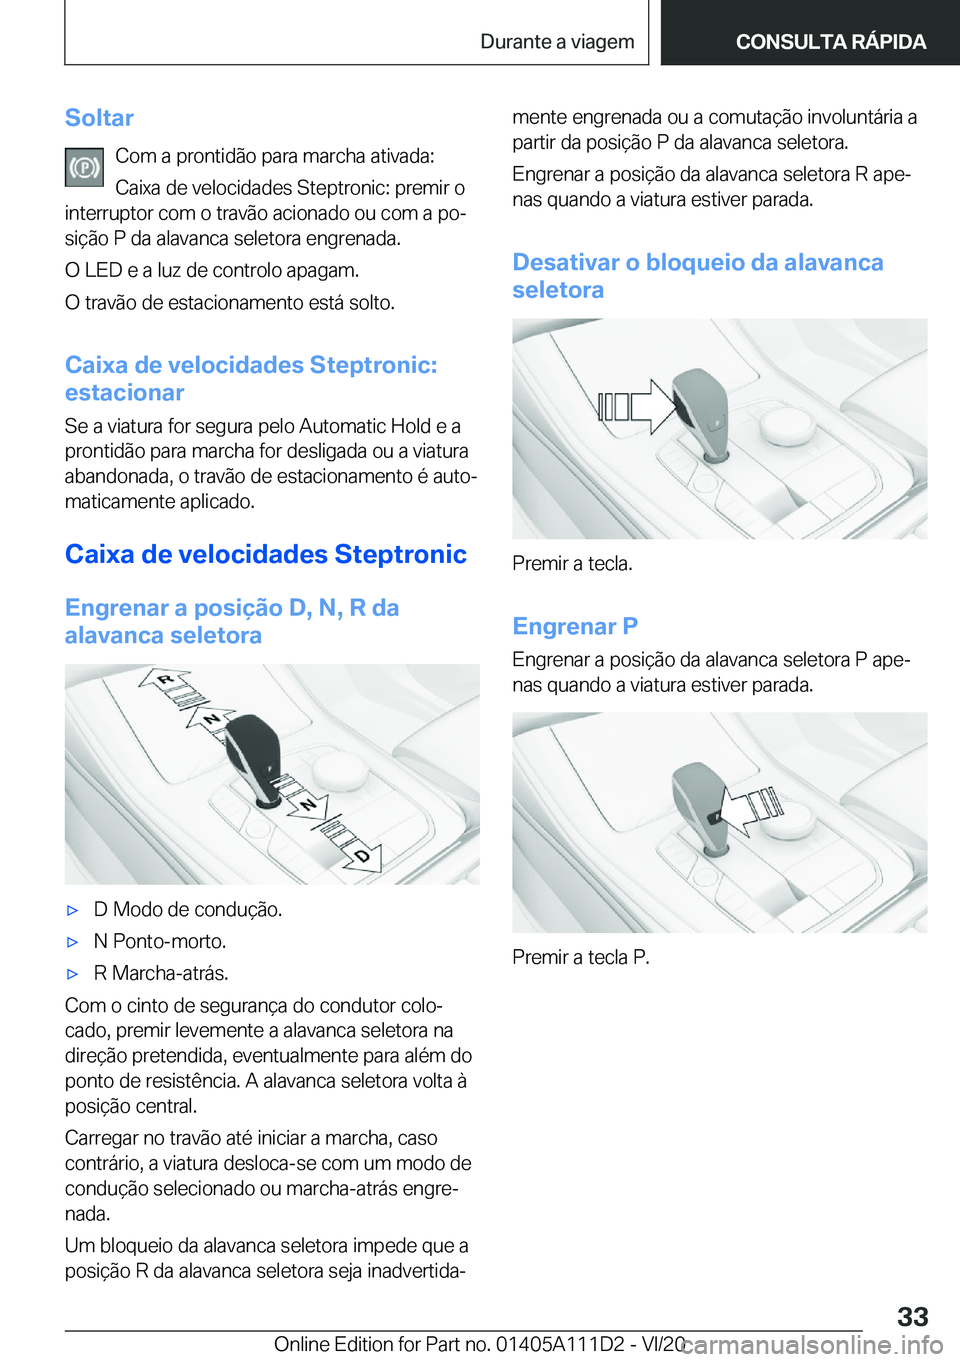 BMW 3 SERIES SEDAN PLUG-IN HYBRID 2021  Manual do condutor (in Portuguese) �S�o�l�t�a�r�C�o�m��a��p�r�o�n�t�i�d�ã�o��p�a�r�a��m�a�r�c�h�a��a�t�i�v�a�d�a�:
�C�a�i�x�a��d�e��v�e�l�o�c�i�d�a�d�e�s��S�t�e�p�t�r�o�n�i�c�:��p�r�e�m�i�r��o
�i�n�t�e�r�r�u�p�t�o�r��c�o�m�